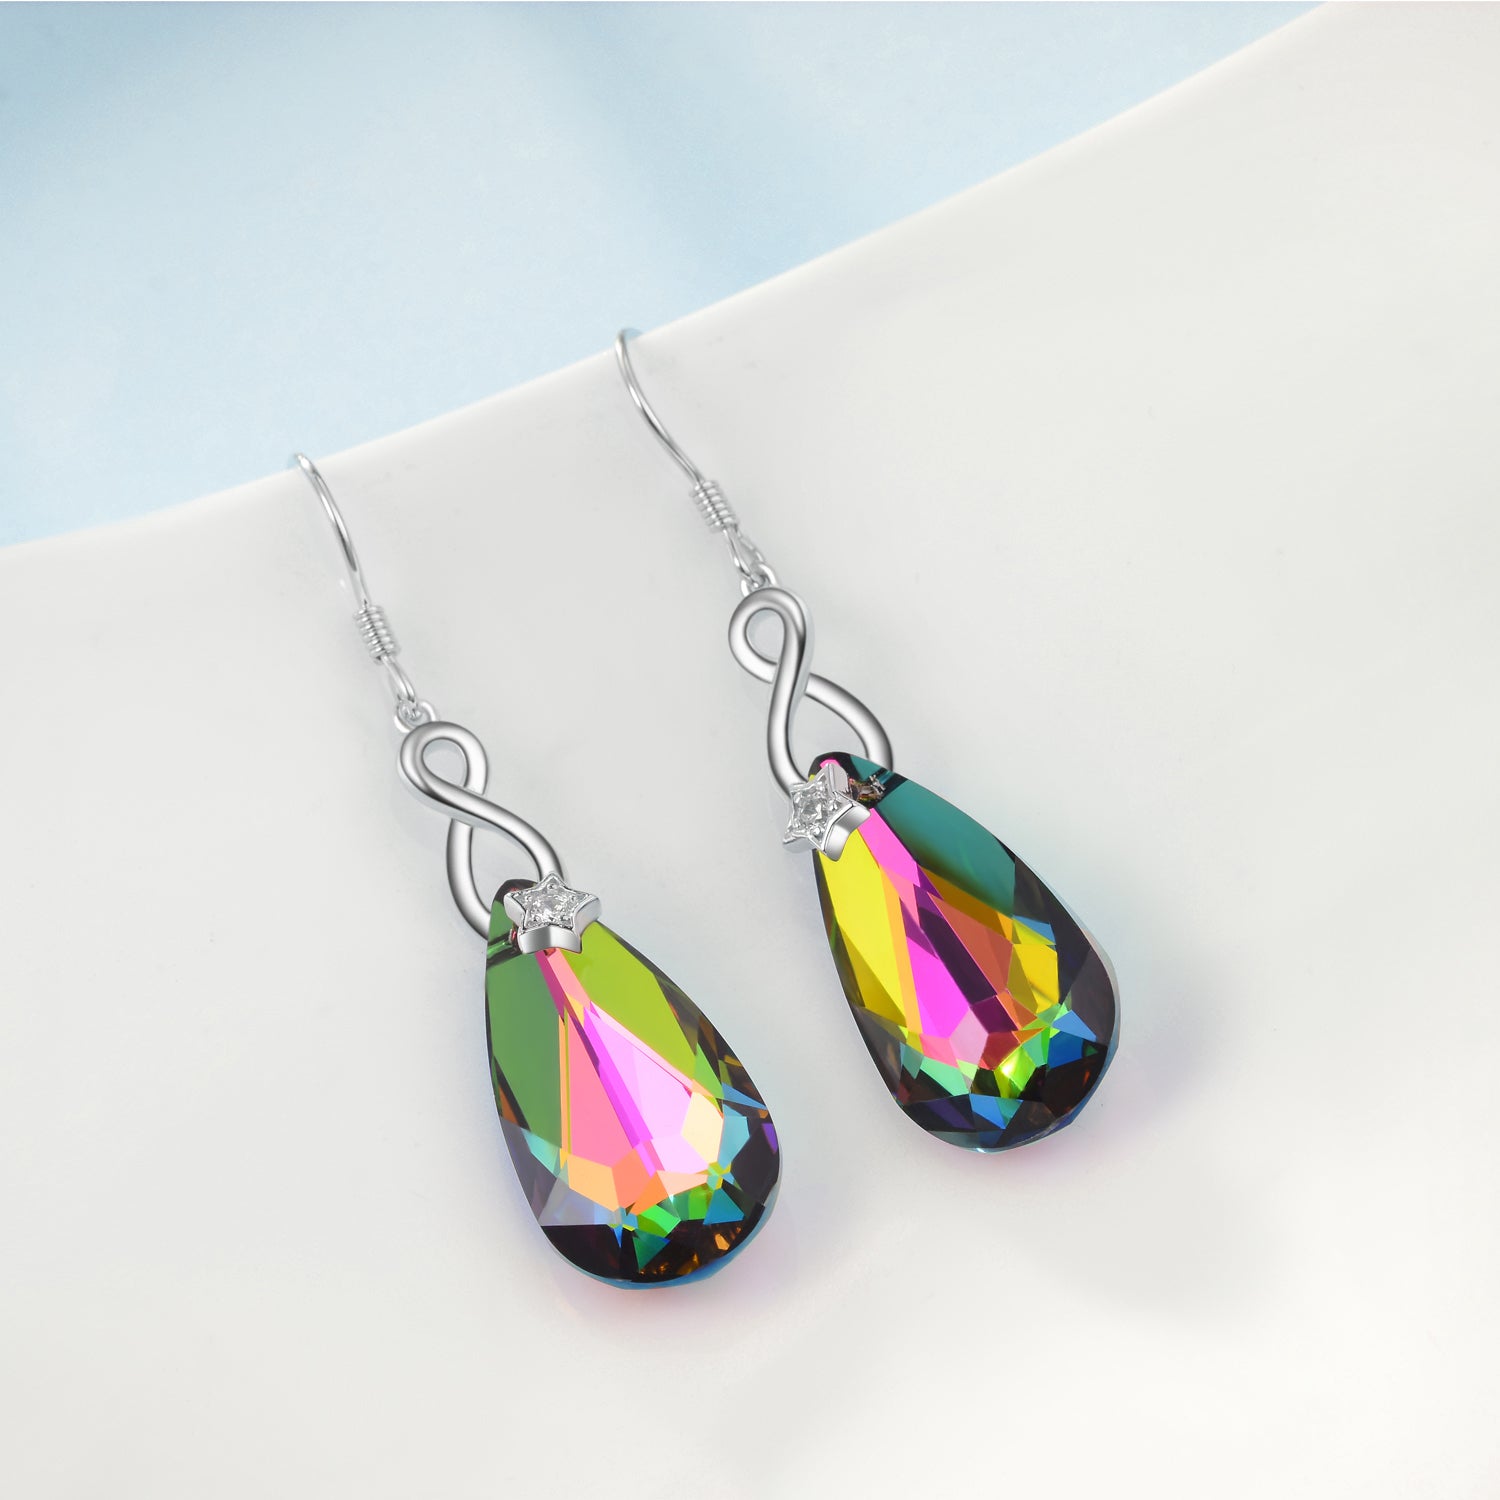 Dangle Earrings Colorful Sparkling Gemstone Pendant Earrings